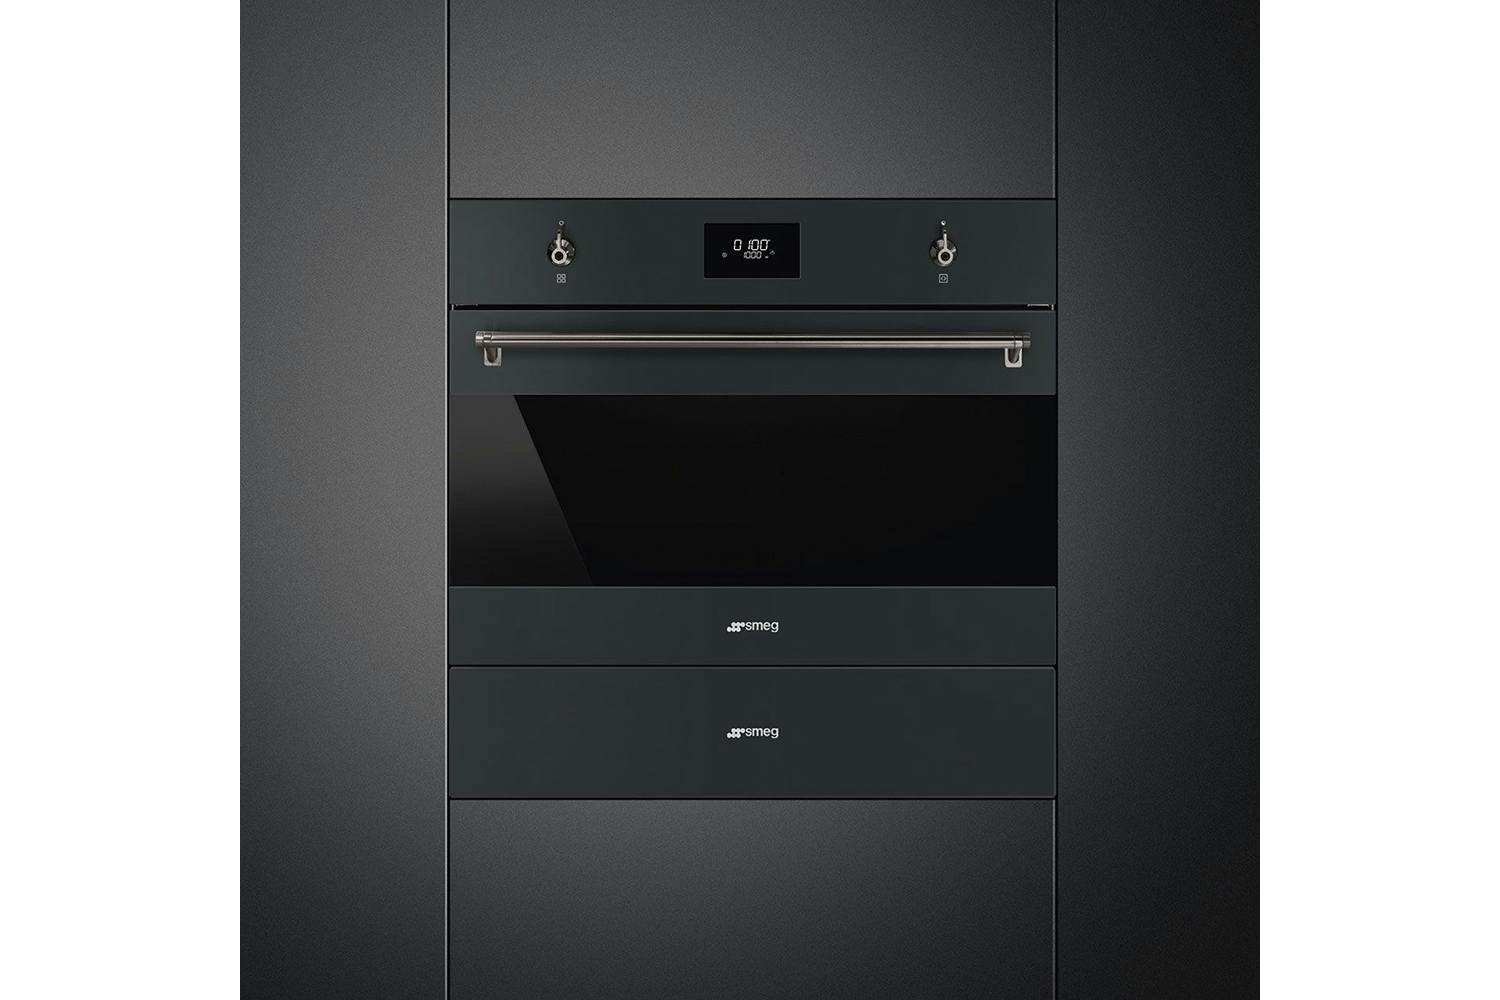 Smeg Classics Combination Oven | SO4301M0N | Black